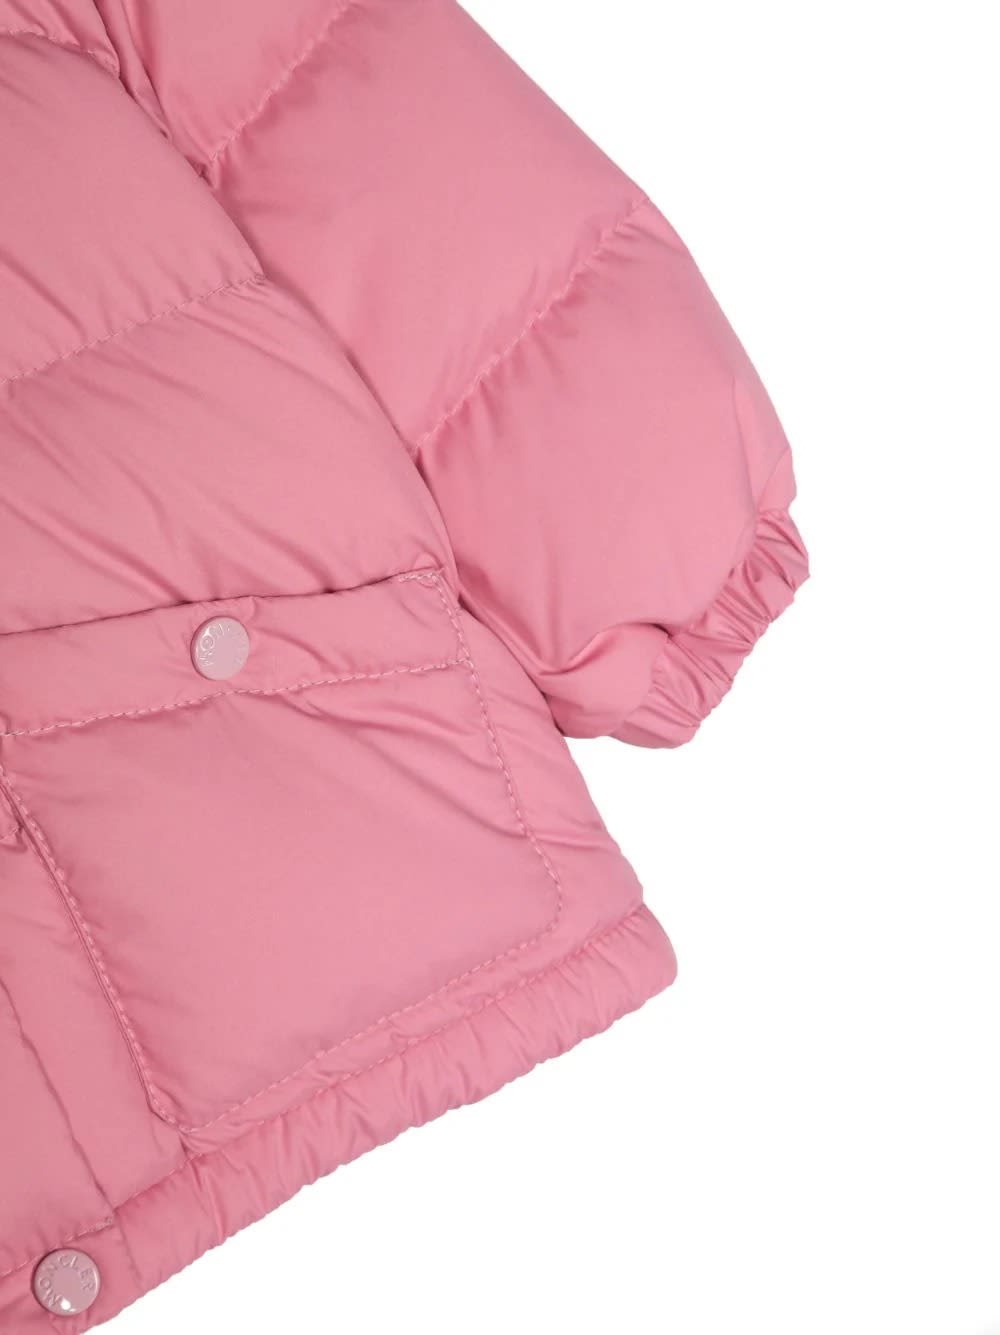 Shop Moncler Pink Ebre Down Jacket